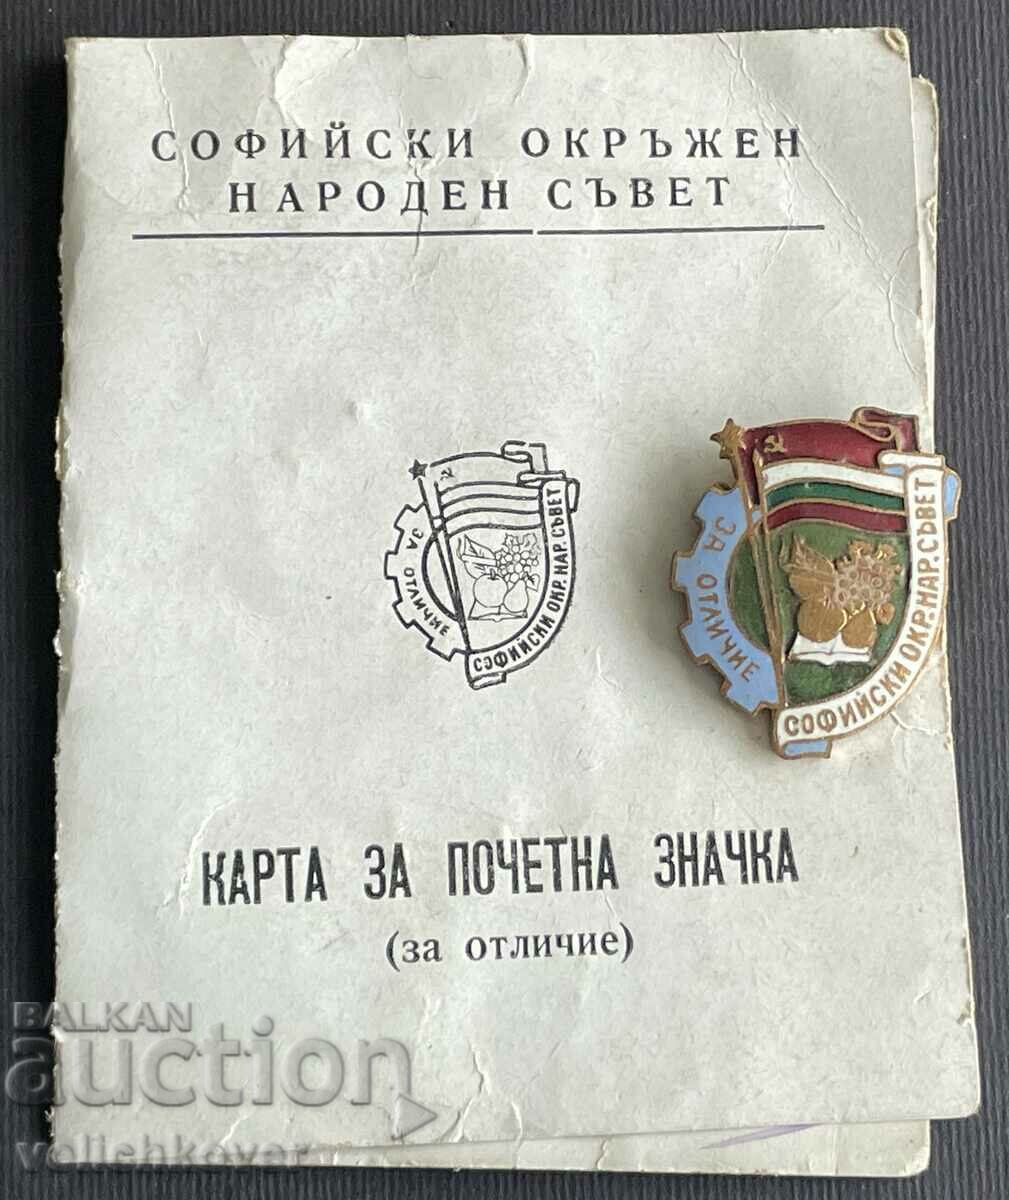 37005 Bulgaria For Distinction Sofia District People's Council ema